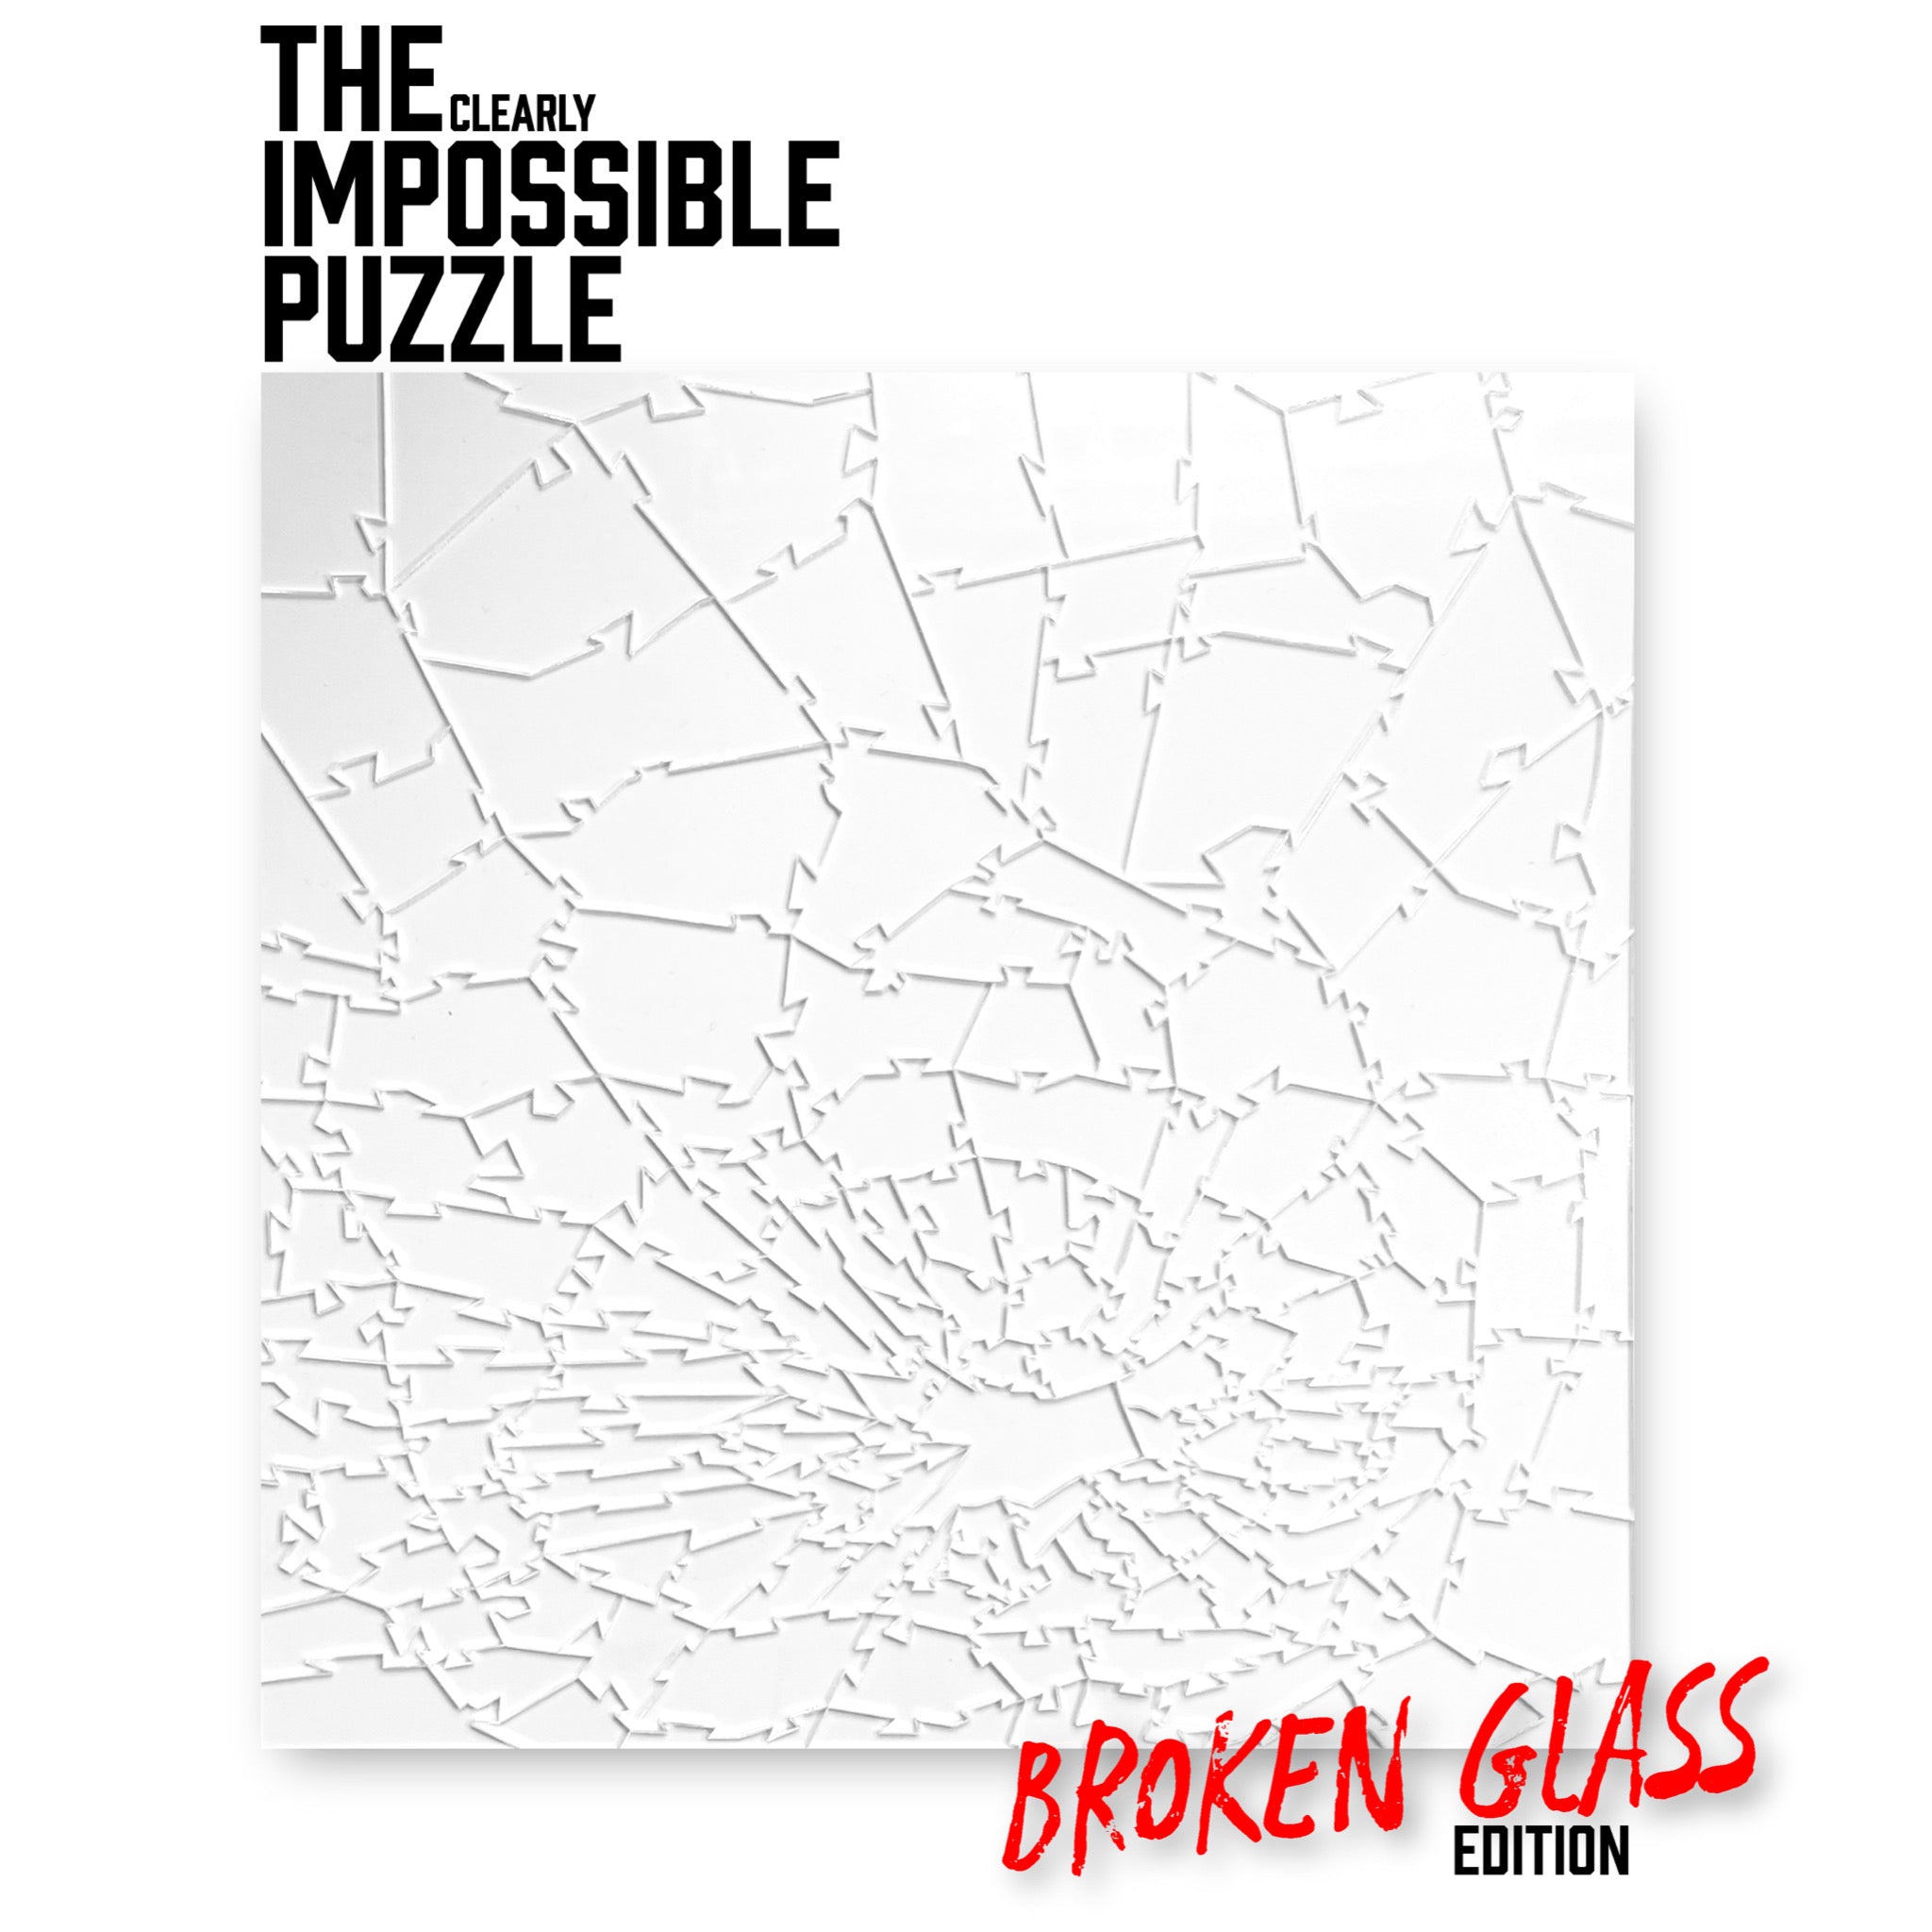 Broken Glass Edition